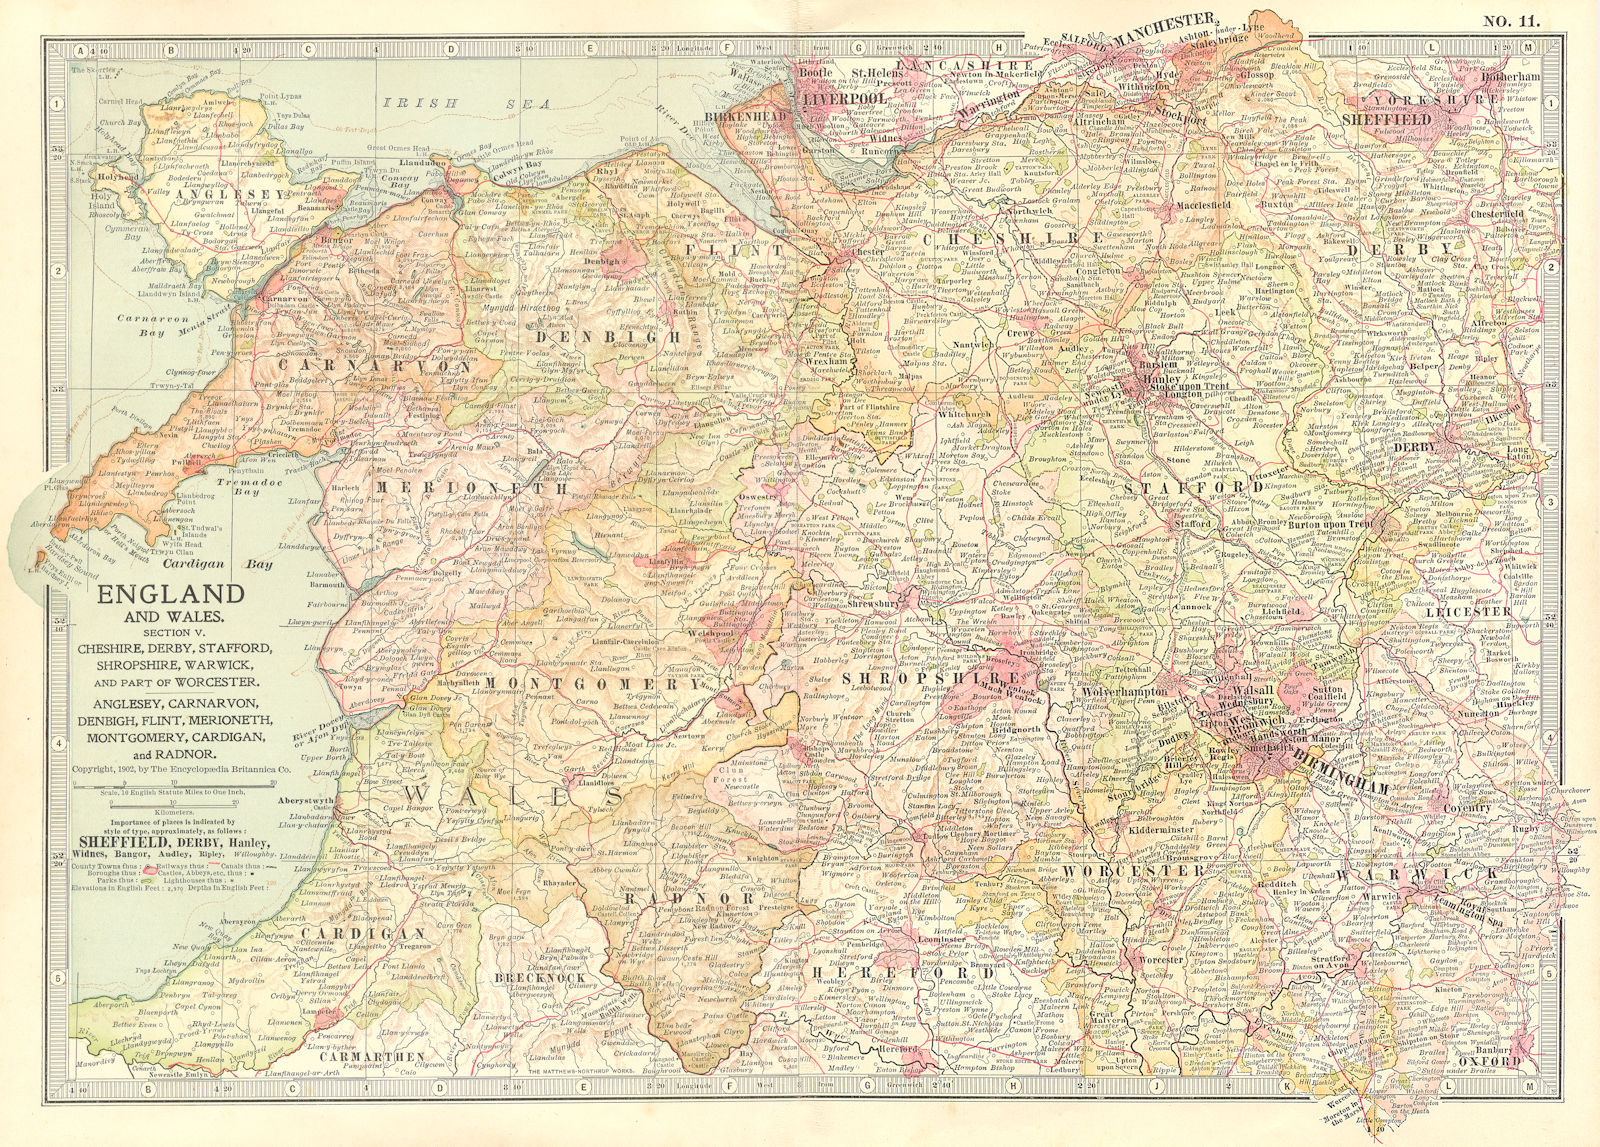 NORTH WALES WEST MIDLANDS. Cheshire Derbyshire Staffordshire Shrops 1903 map